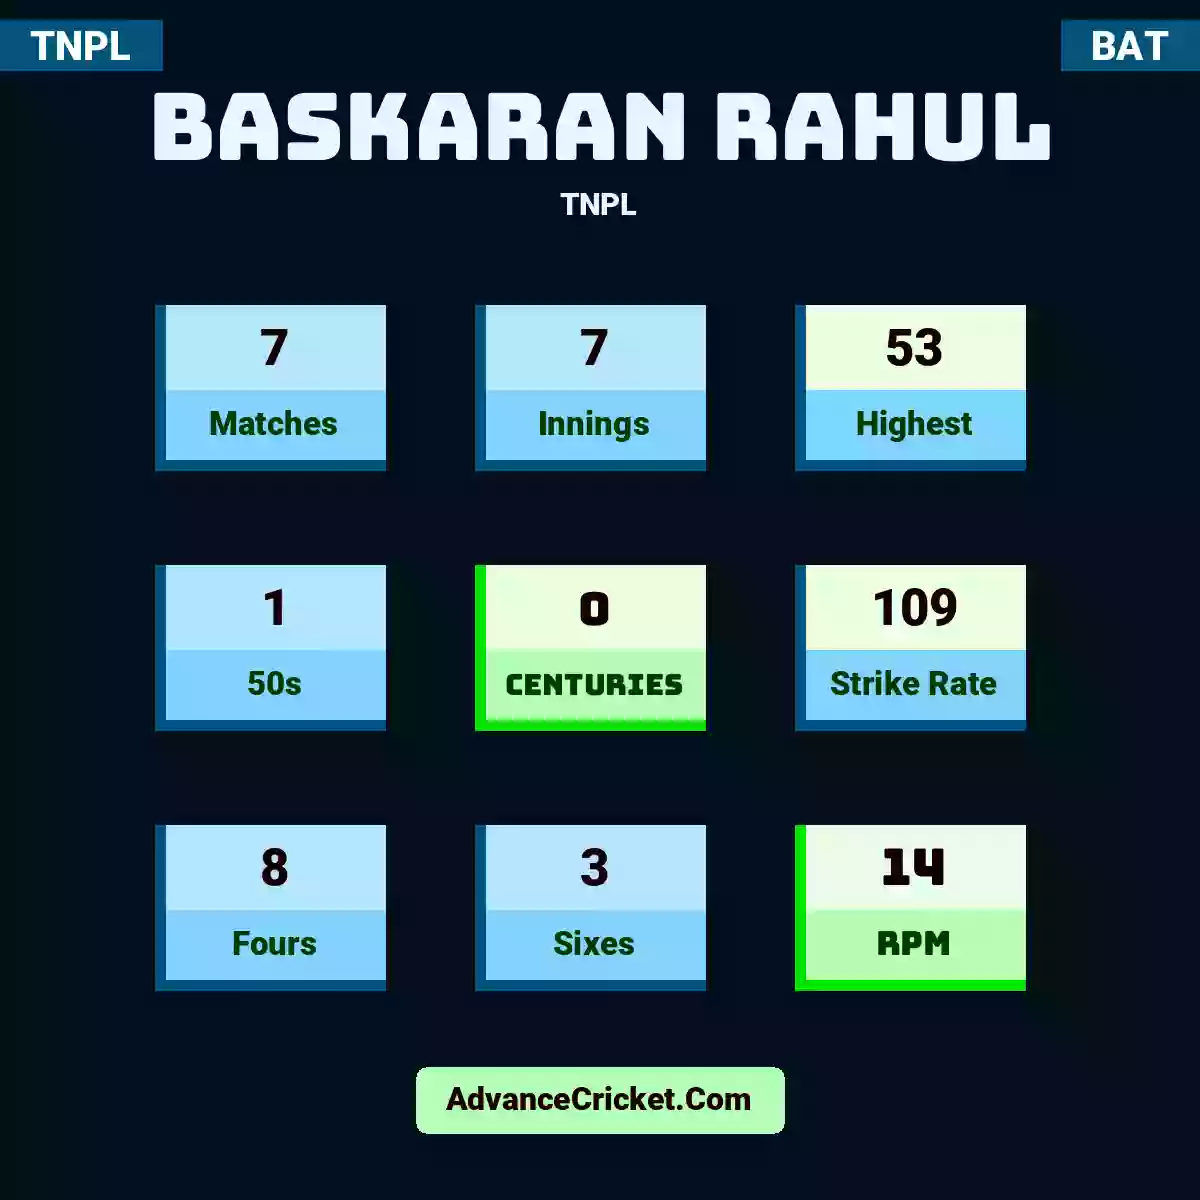 Baskaran Rahul TNPL , Baskaran Rahul played 7 matches, scored 53 runs as highest, 1 half-centuries, and 0 centuries, with a strike rate of 109. B.Rahul hit 8 fours and 3 sixes, with an RPM of 14.